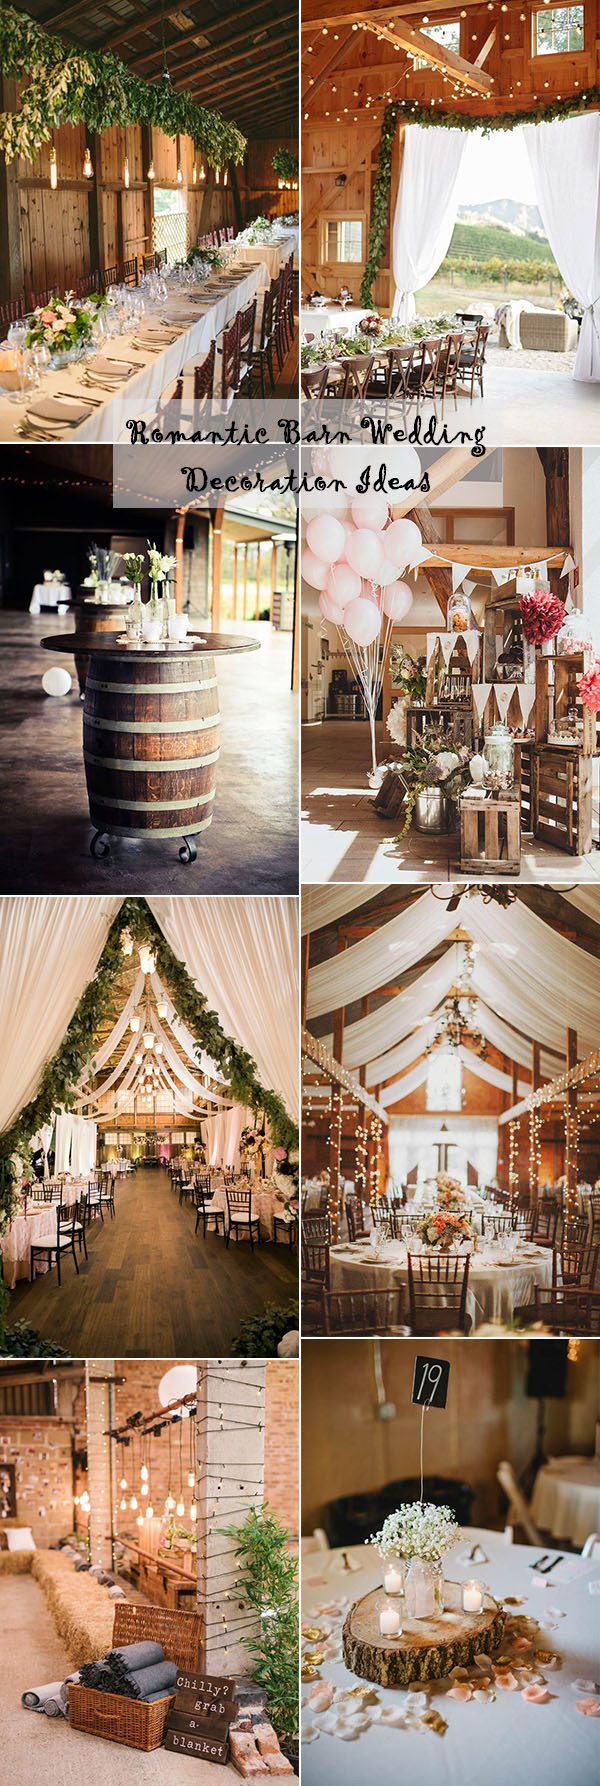 Barn Wedding Decor
 25 Sweet and Romantic Rustic Barn Wedding Decoration Ideas